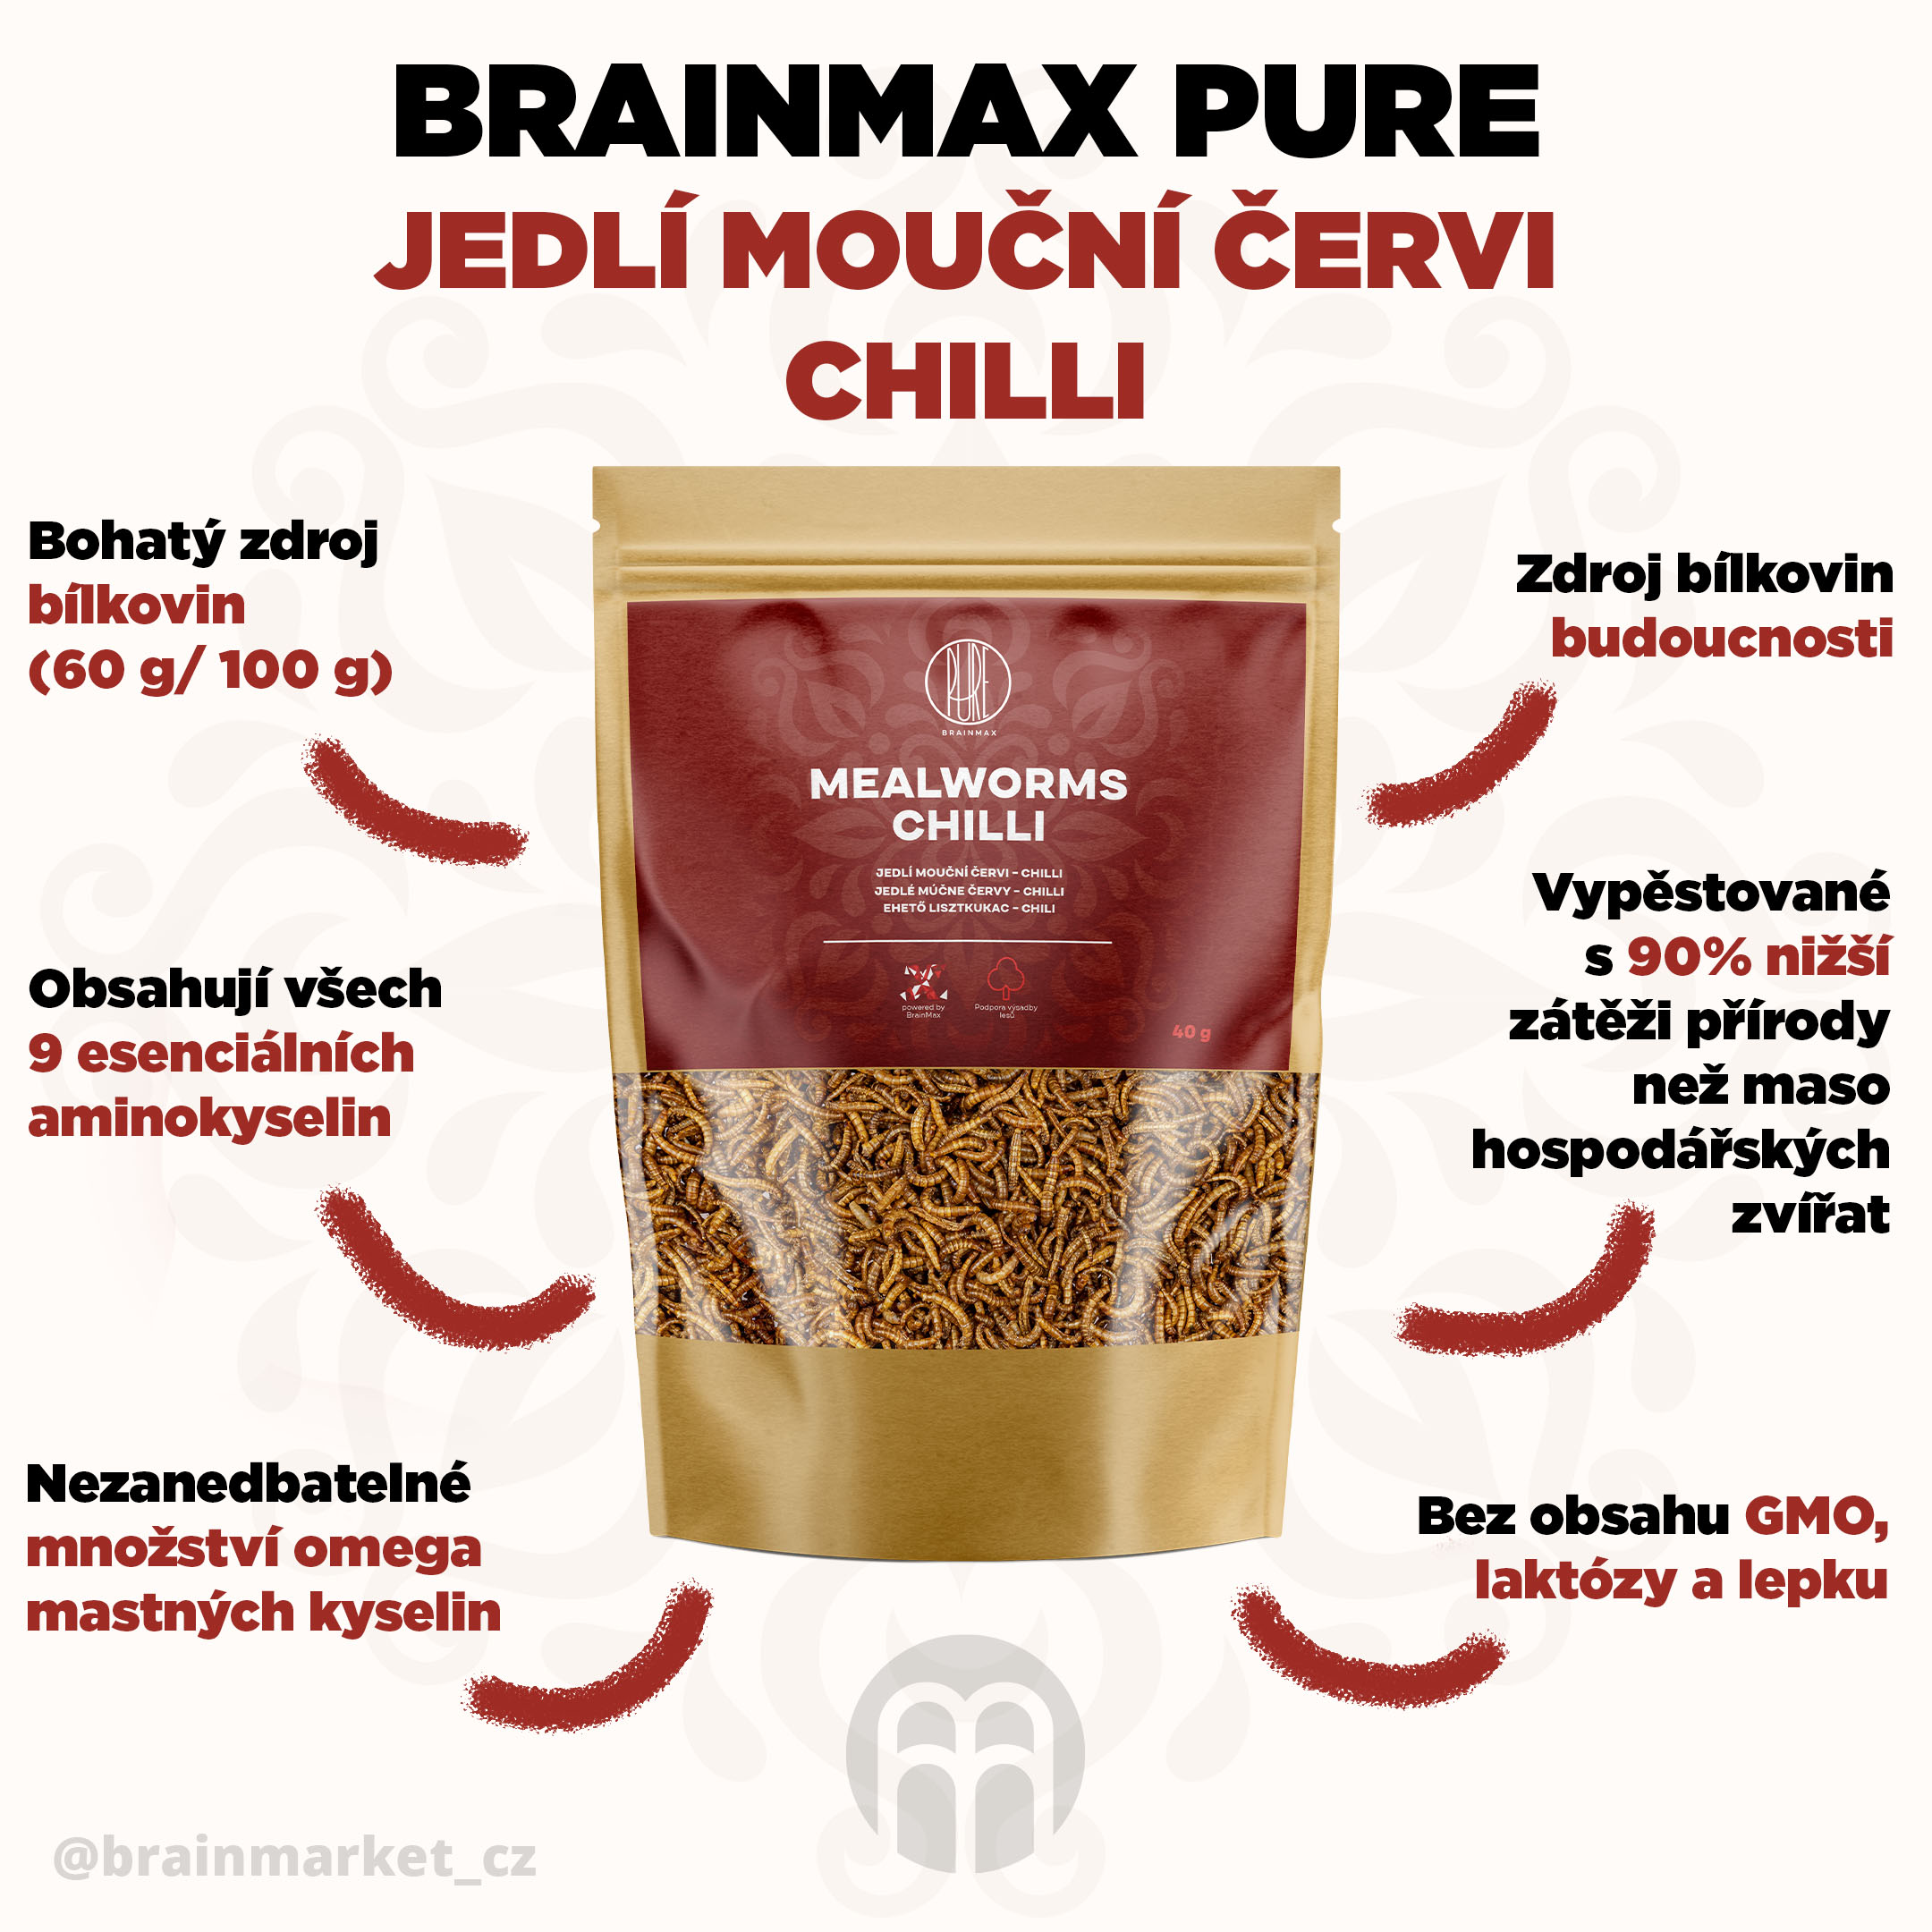 brainmax pure cervi chilli infografika brainmarket CZ